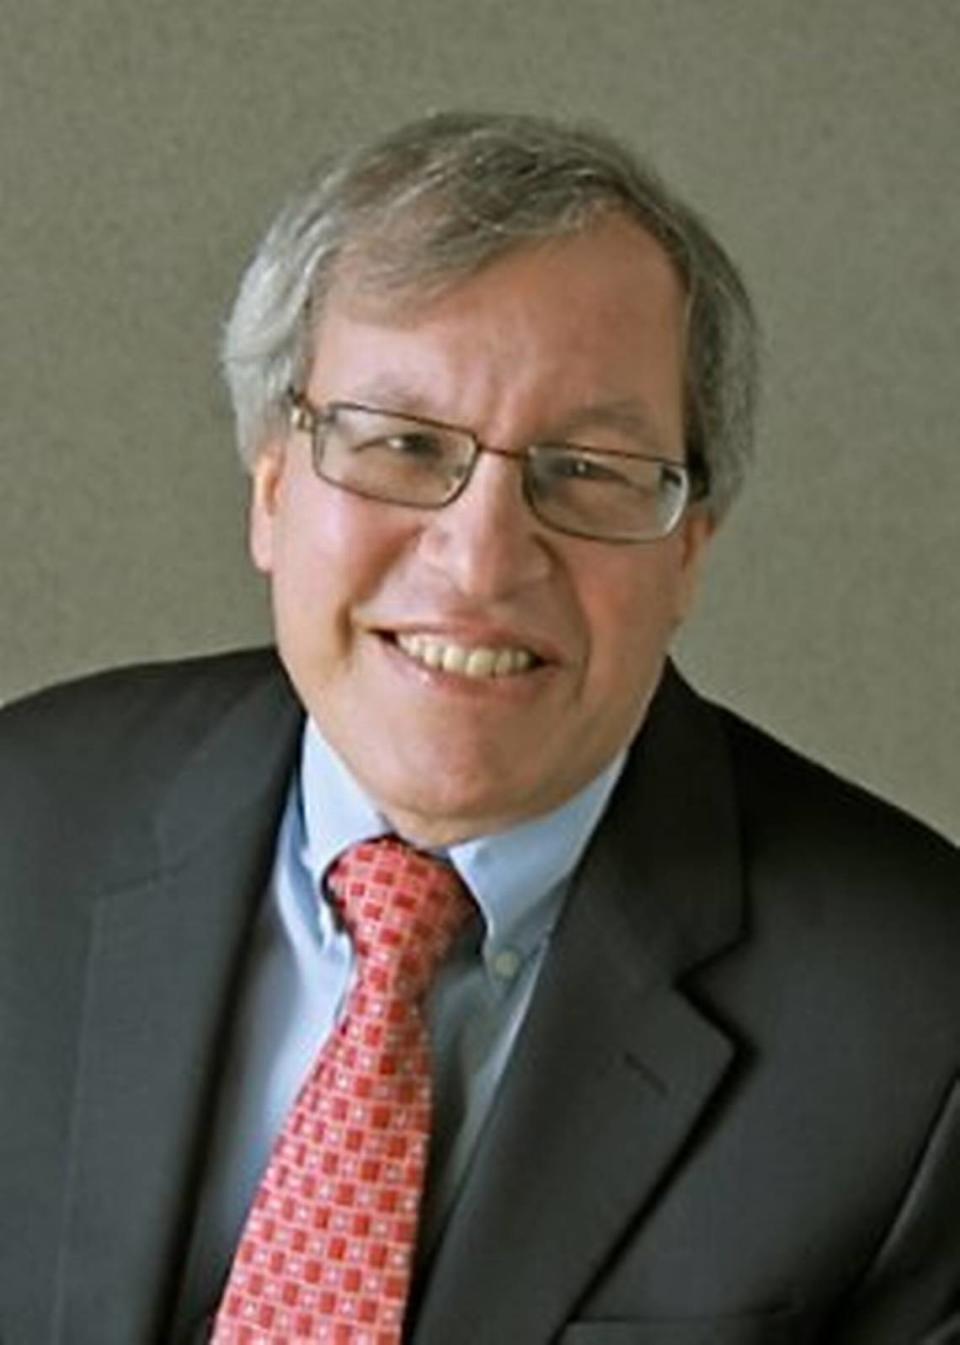 Erwin Chemerinsky is dean and professor of law at the UC Berkeley School of Law.